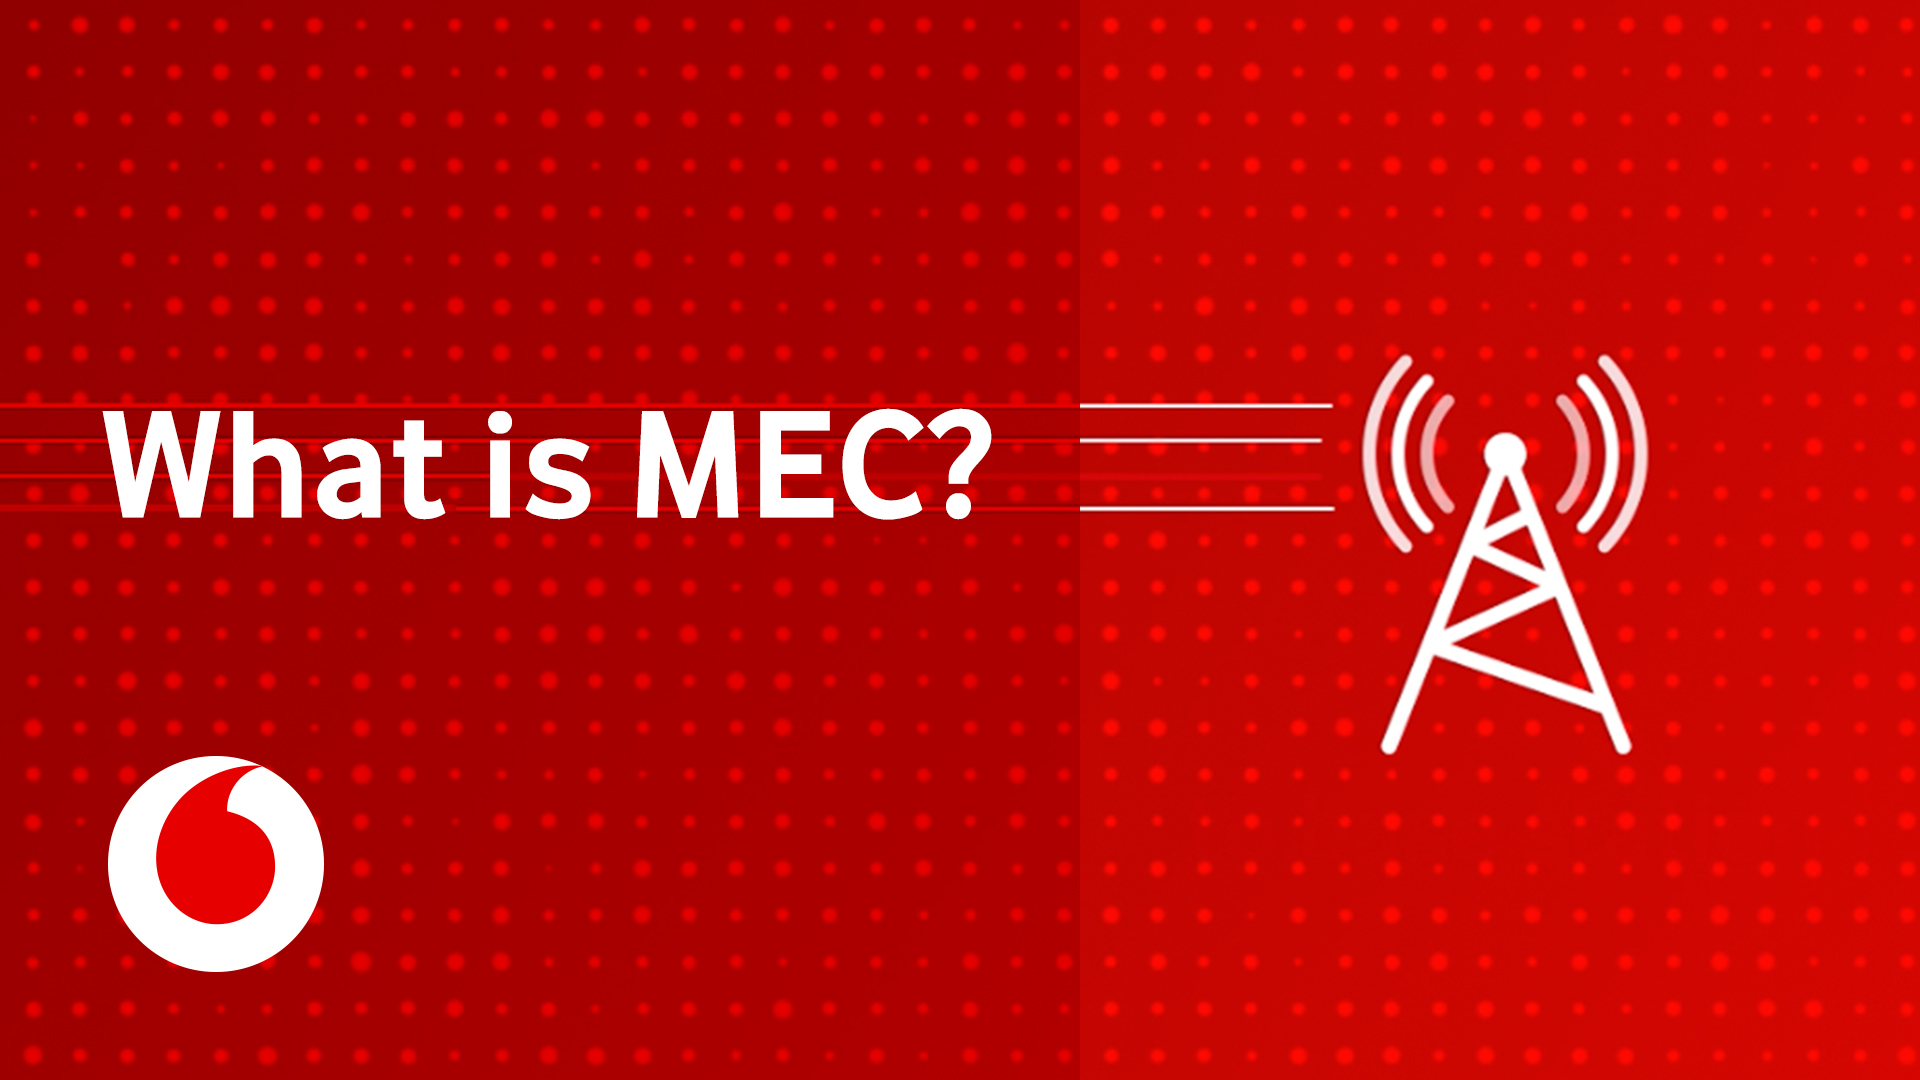 What is MEC?